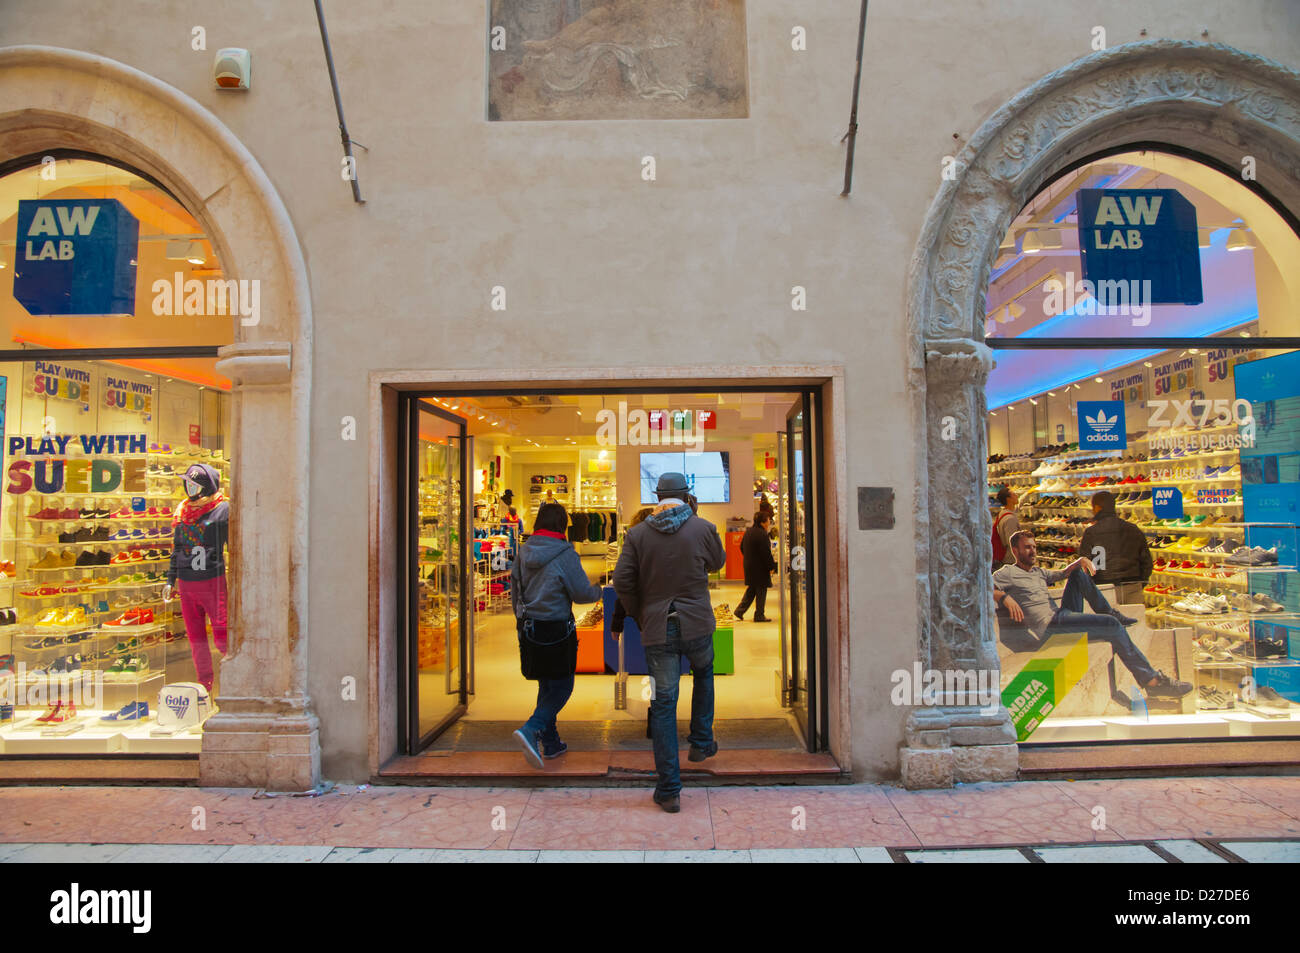 AW Lab shoe shop Via Mazzini pedestrian street old town Verona city the  Veneto region northern Italy Europe Stock Photo - Alamy